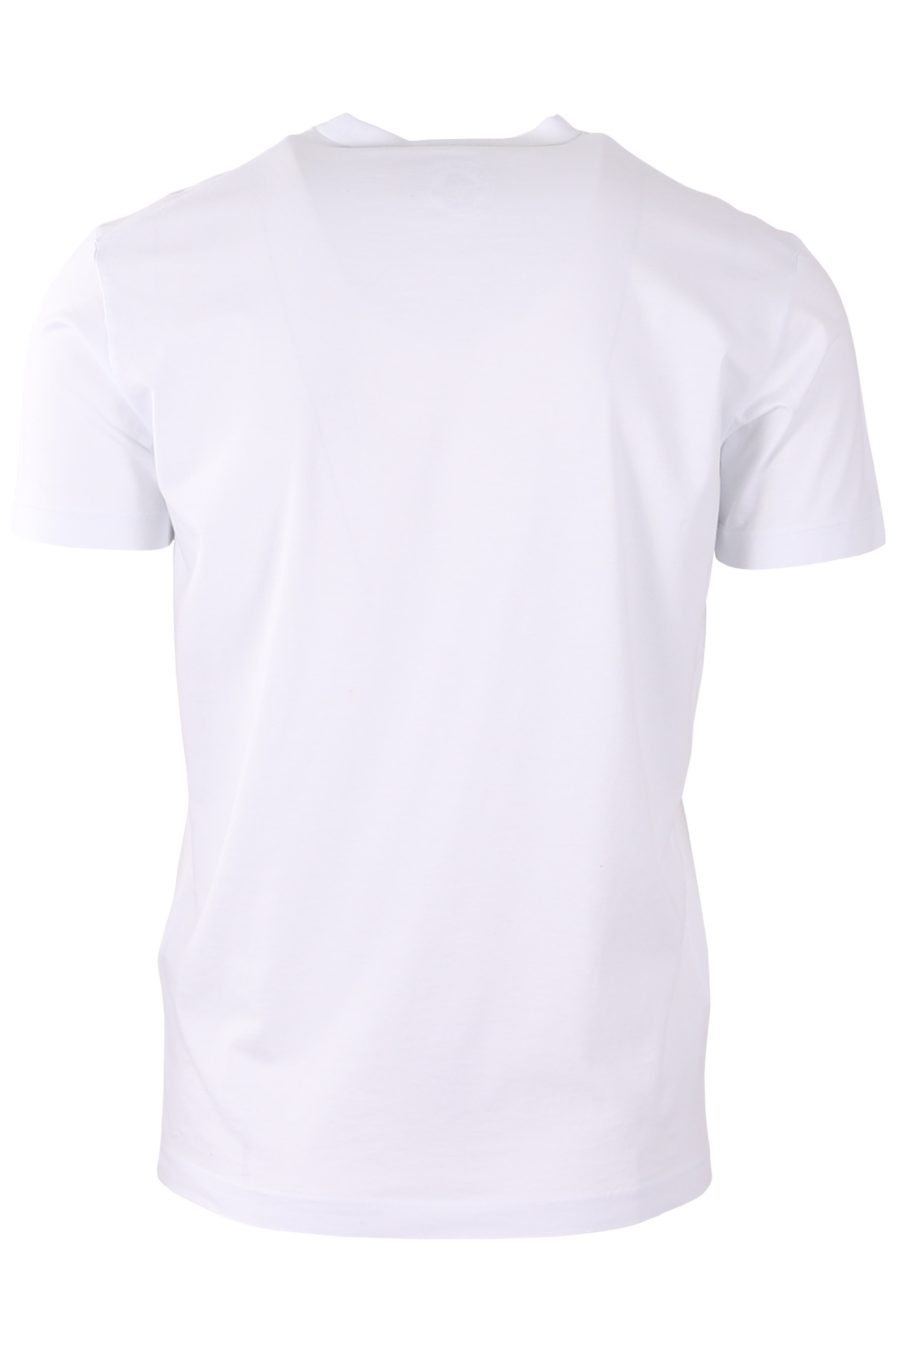 Camiseta Dsquared2 blanca logo negro made in italy - 27af635843714ae3556a5f070778d0dd40dadb1b